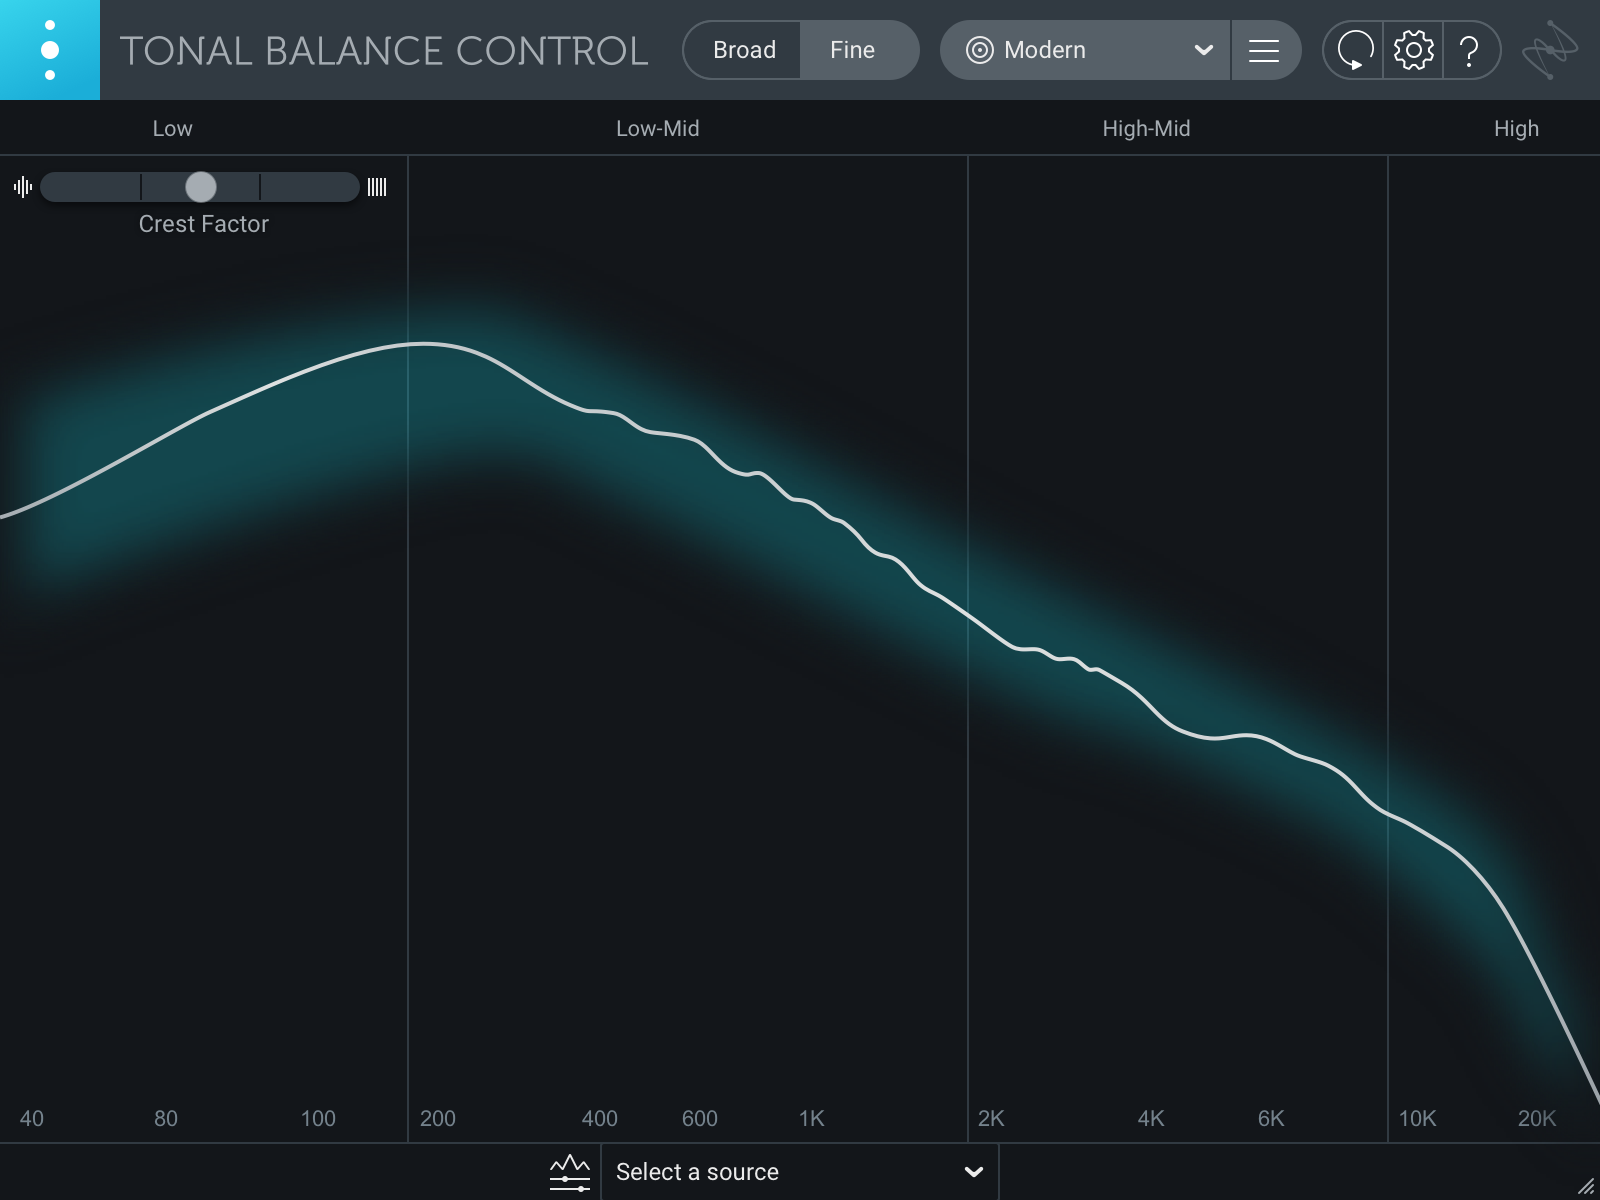 Tonal Balance Control II V2.1.0. Tonal Balance Control 2 VST. Ozone tonal Balance Control. Balance Control VST.